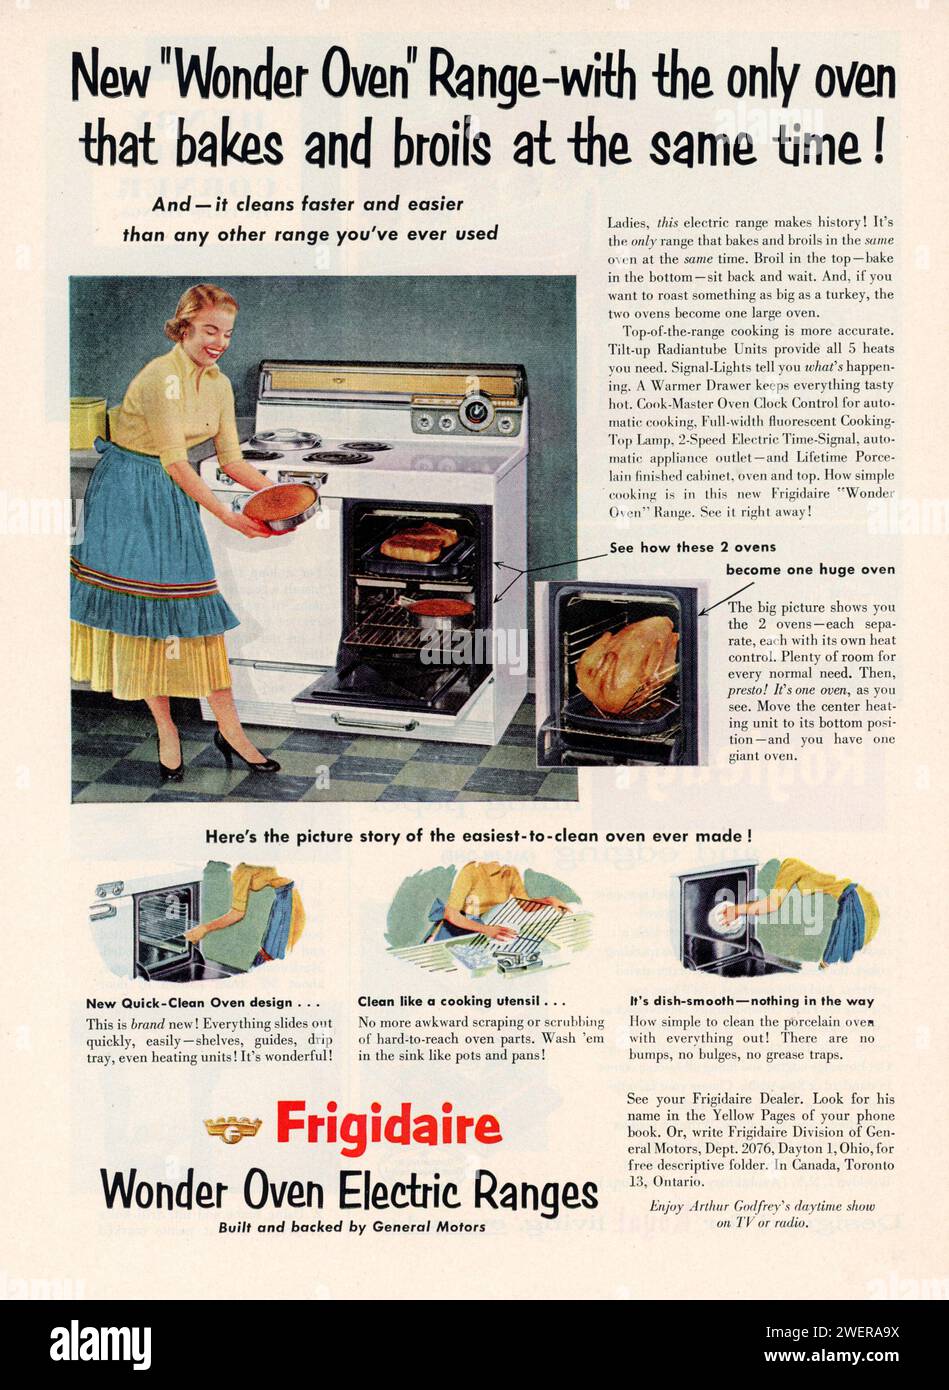 Vintage 'Good Housekeeping' magazine May 1953 issue Advert, USA Stock Photo